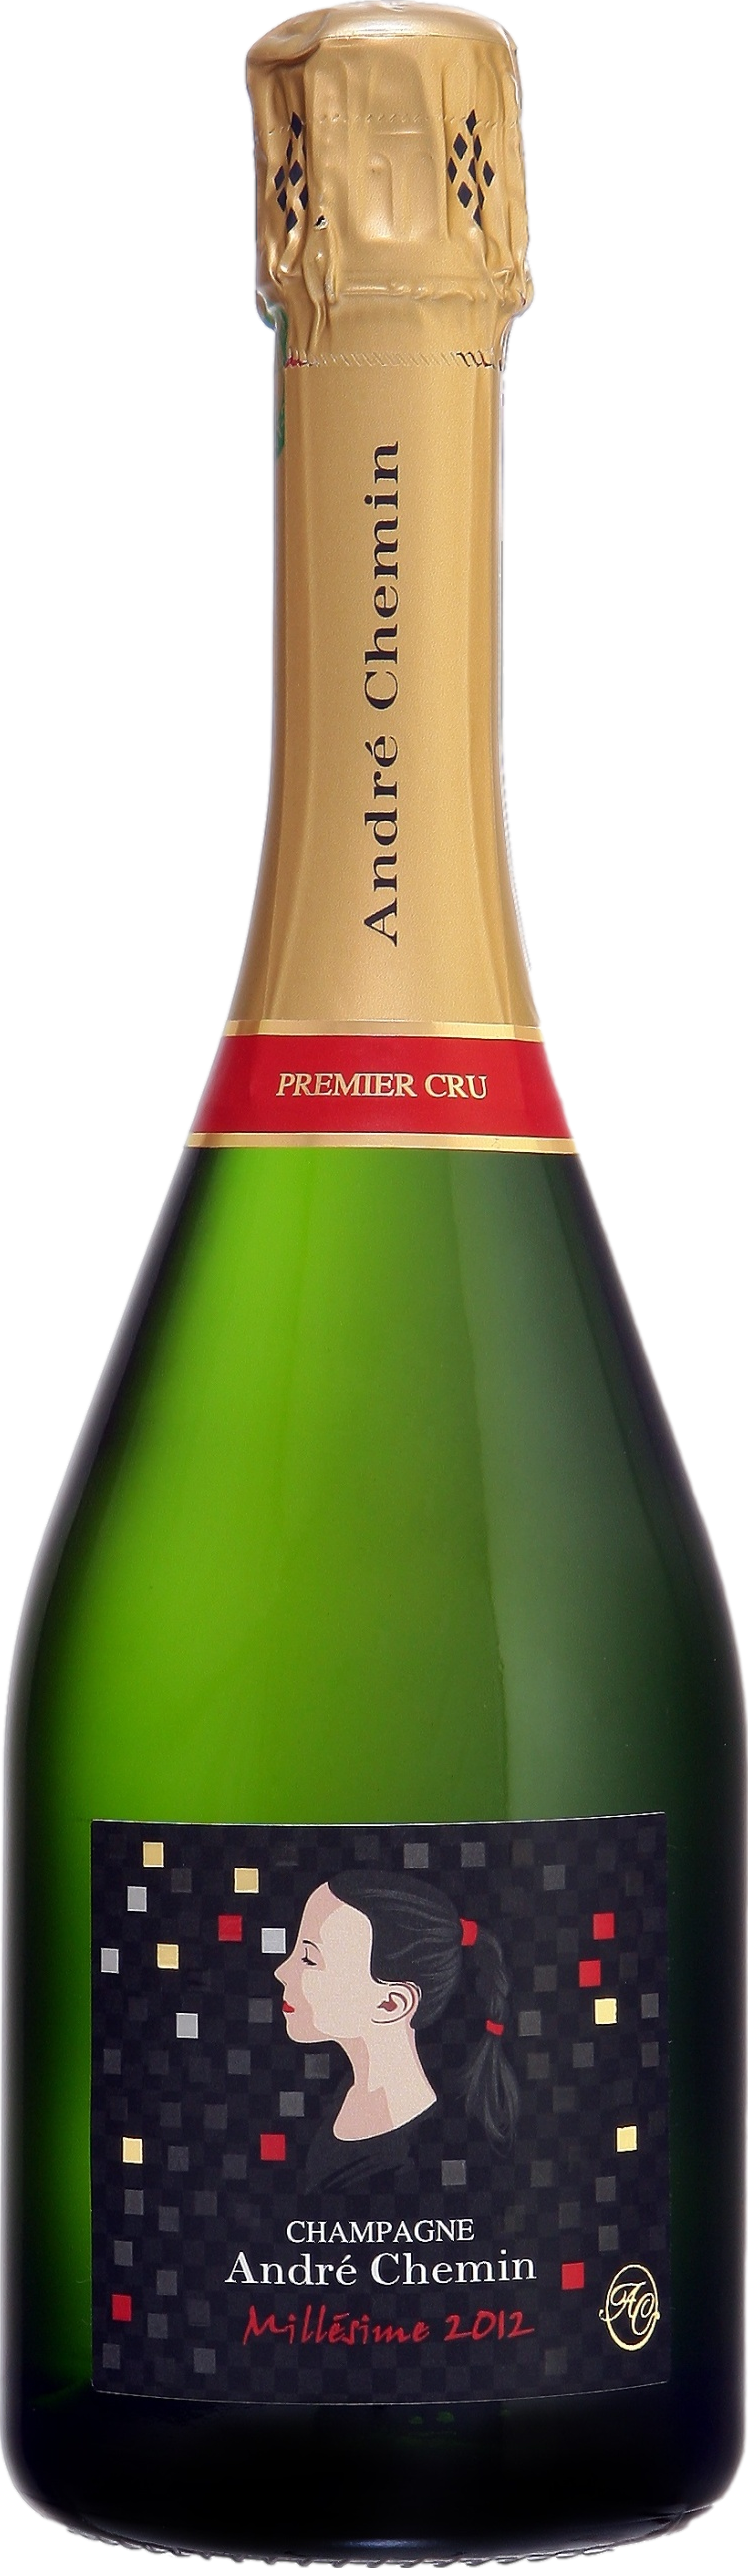 Cru Les günstig Kaufen-Champagne Andre Chemin Premier Cru Millesime Brut 2012. Champagne Andre Chemin Premier Cru Millesime Brut 2012 . 